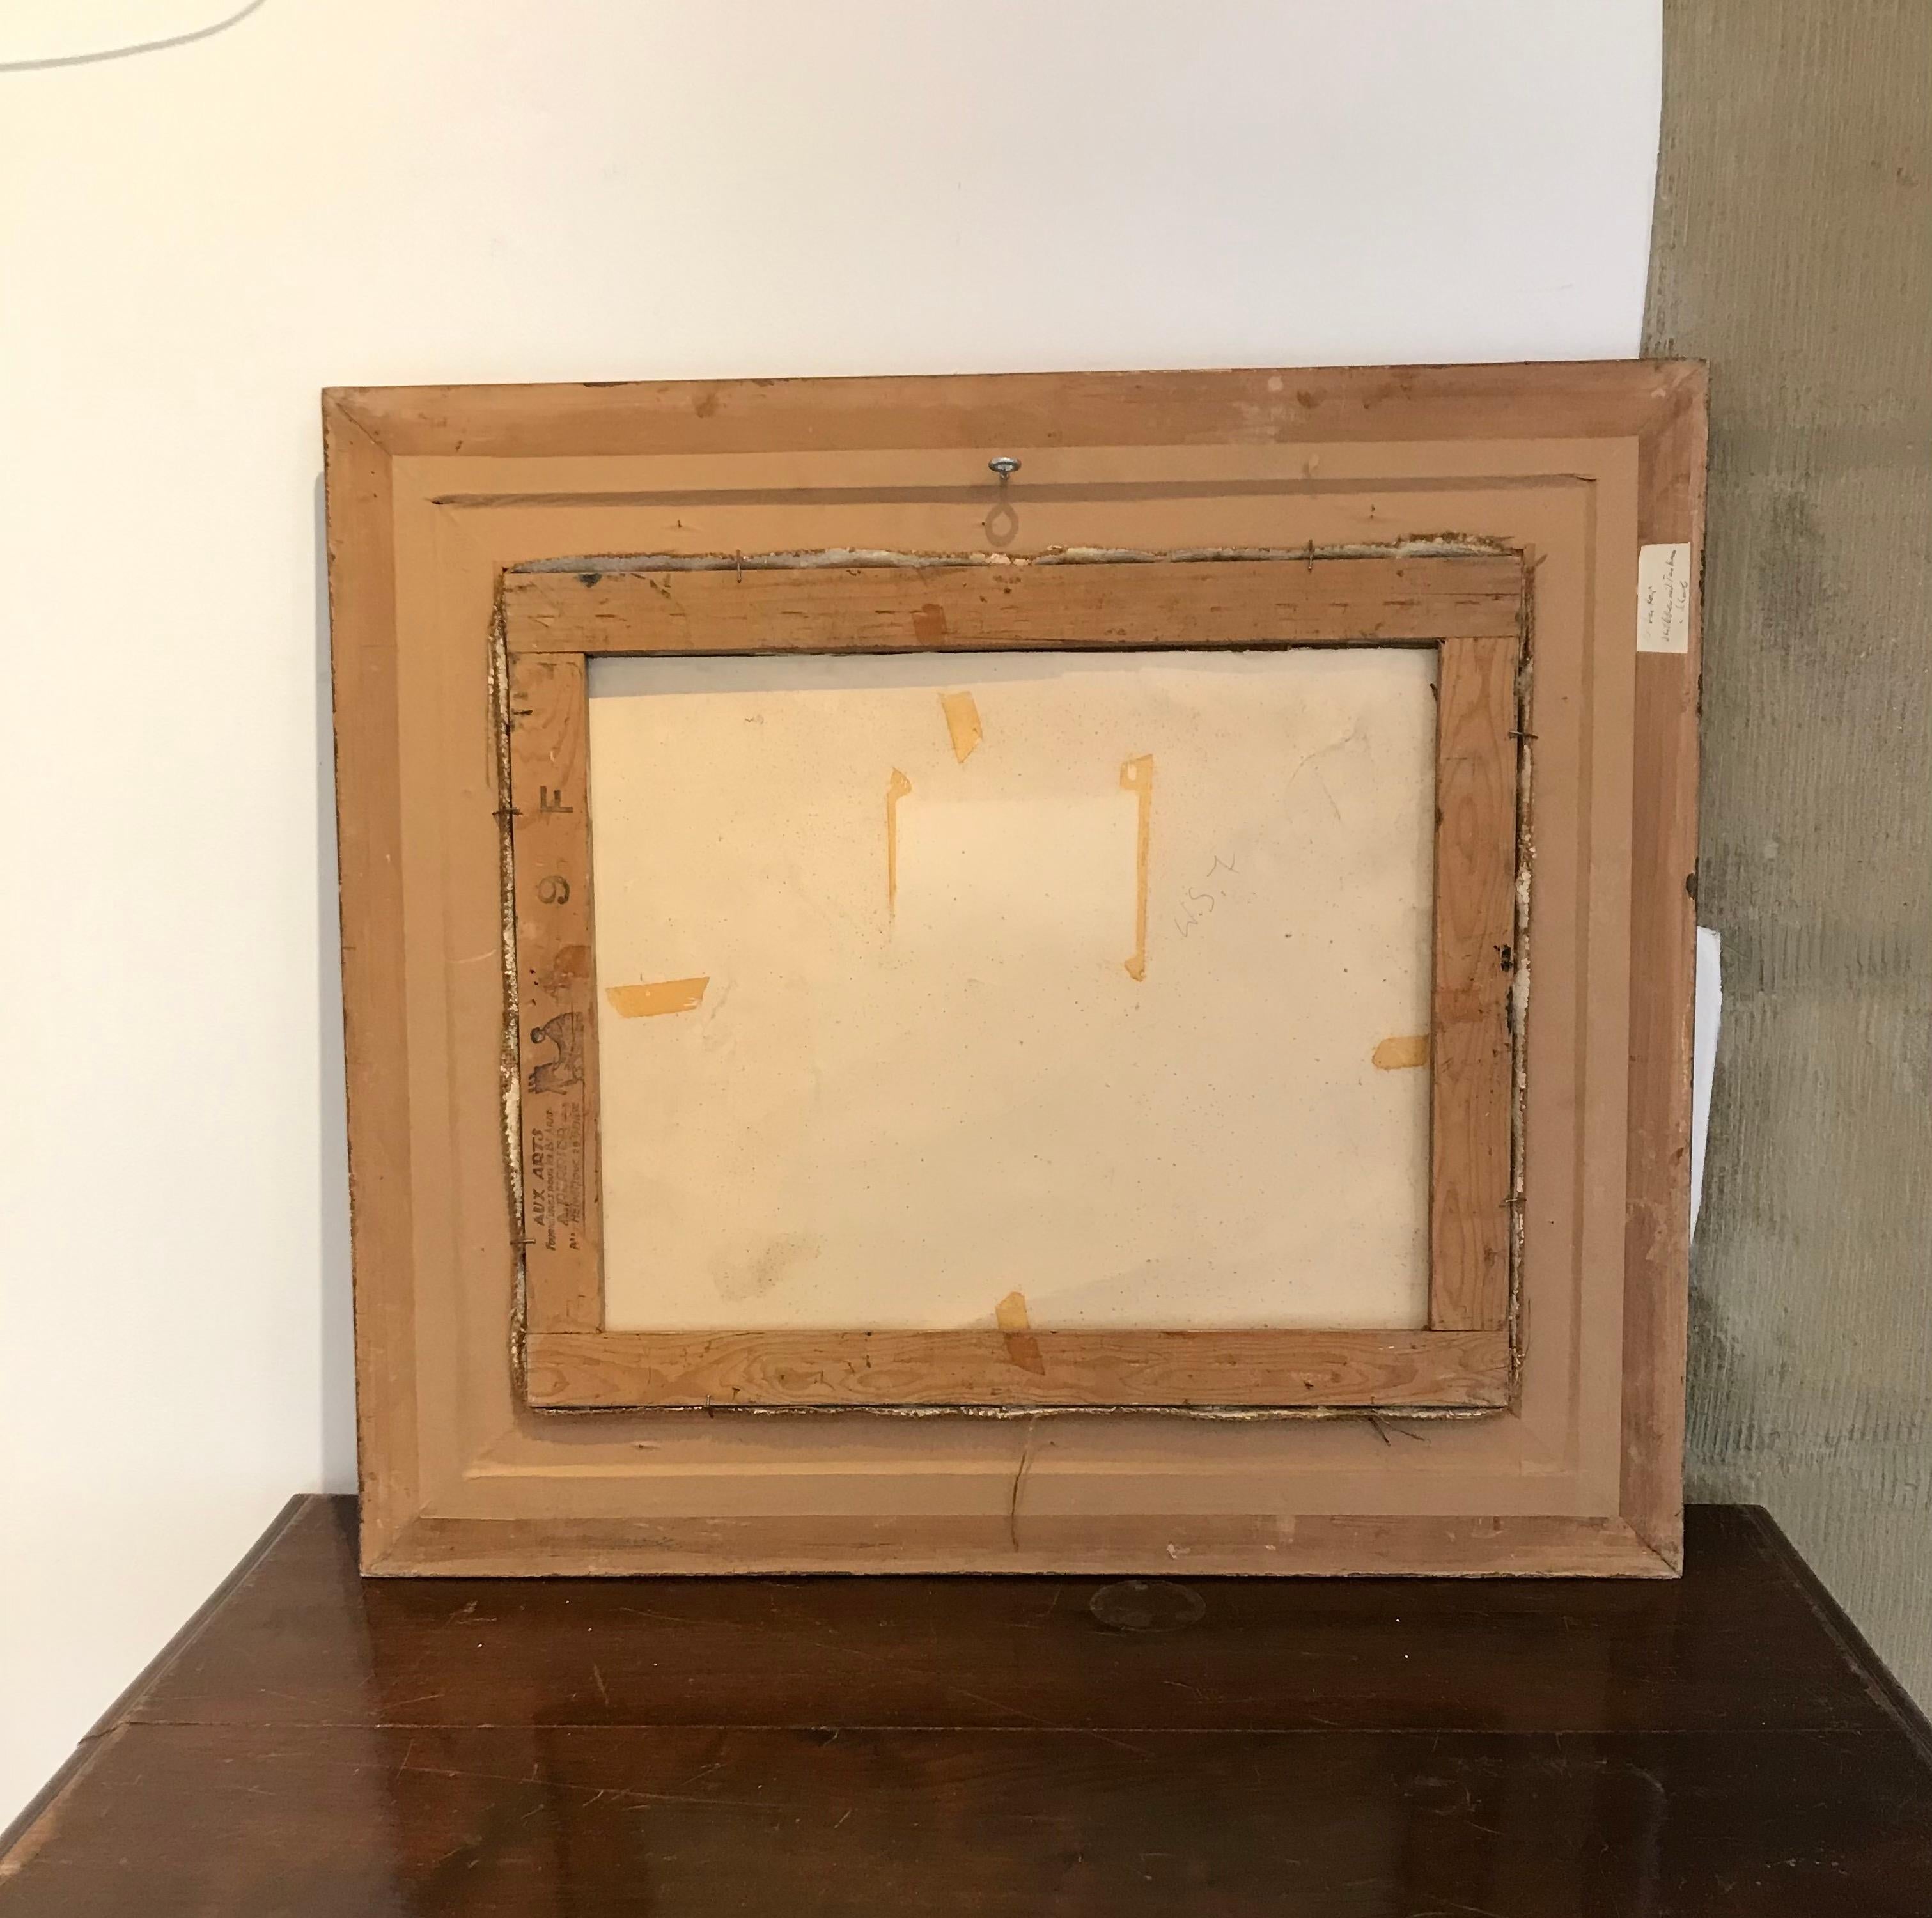 Work on cardboard
Gilded wood frame
60 x 69 x 5 cm